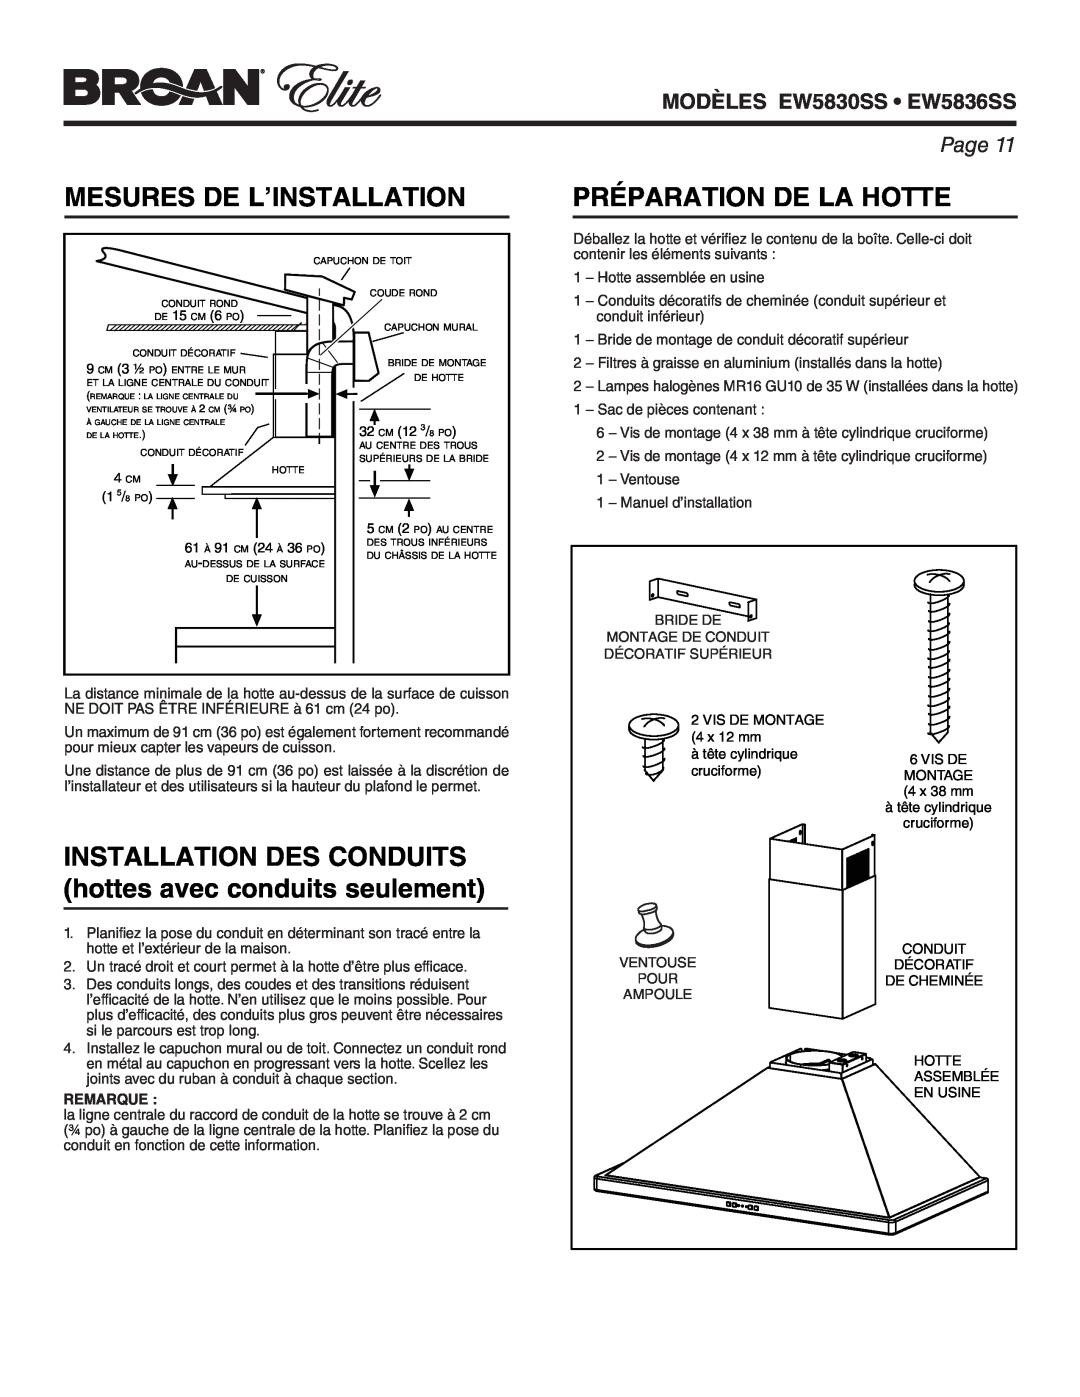 Broan warranty Mesures De L’Installation, Préparation De La Hotte, MODÈLES EW5830SS EW5836SS, Page, Remarque 